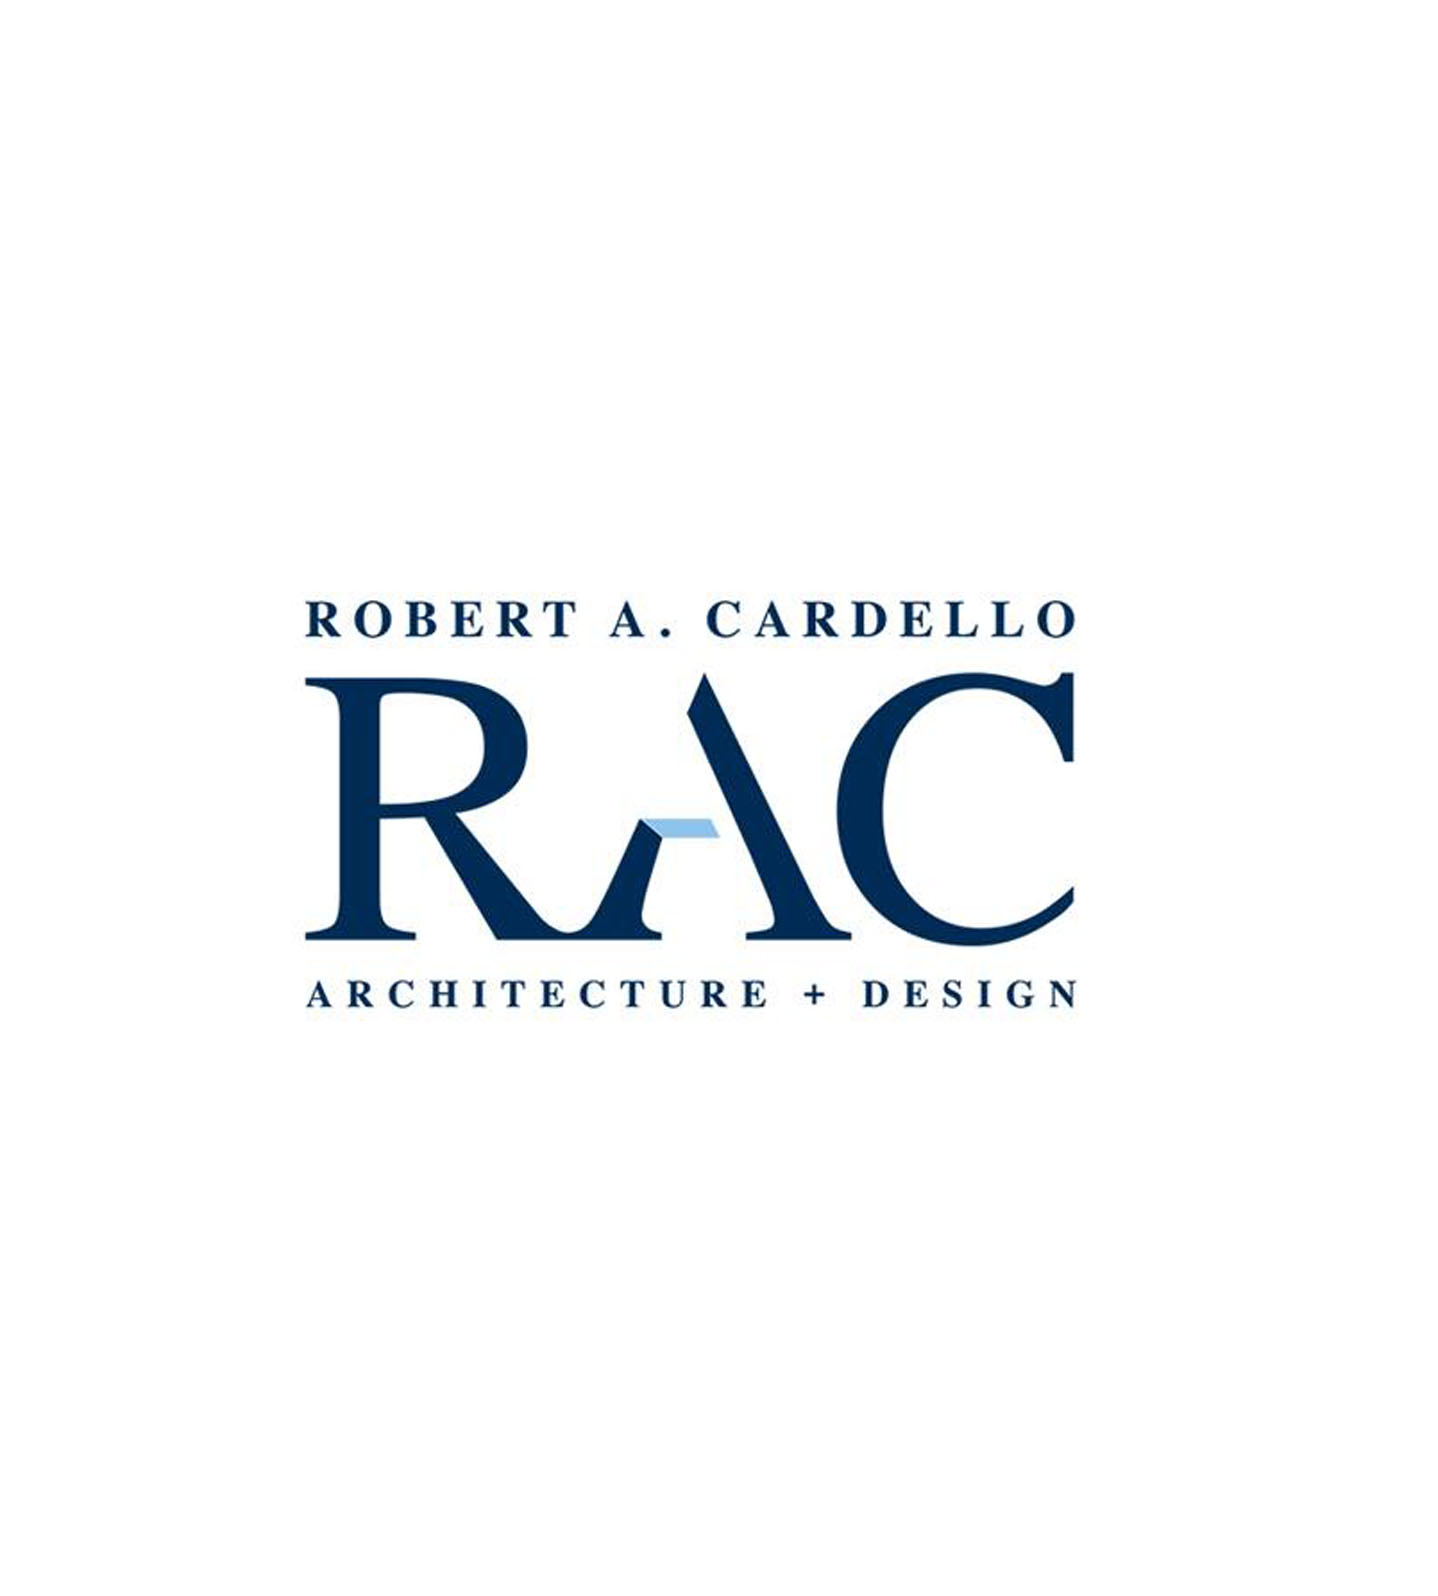 ROBERT CARDELLO ARCHITECTS